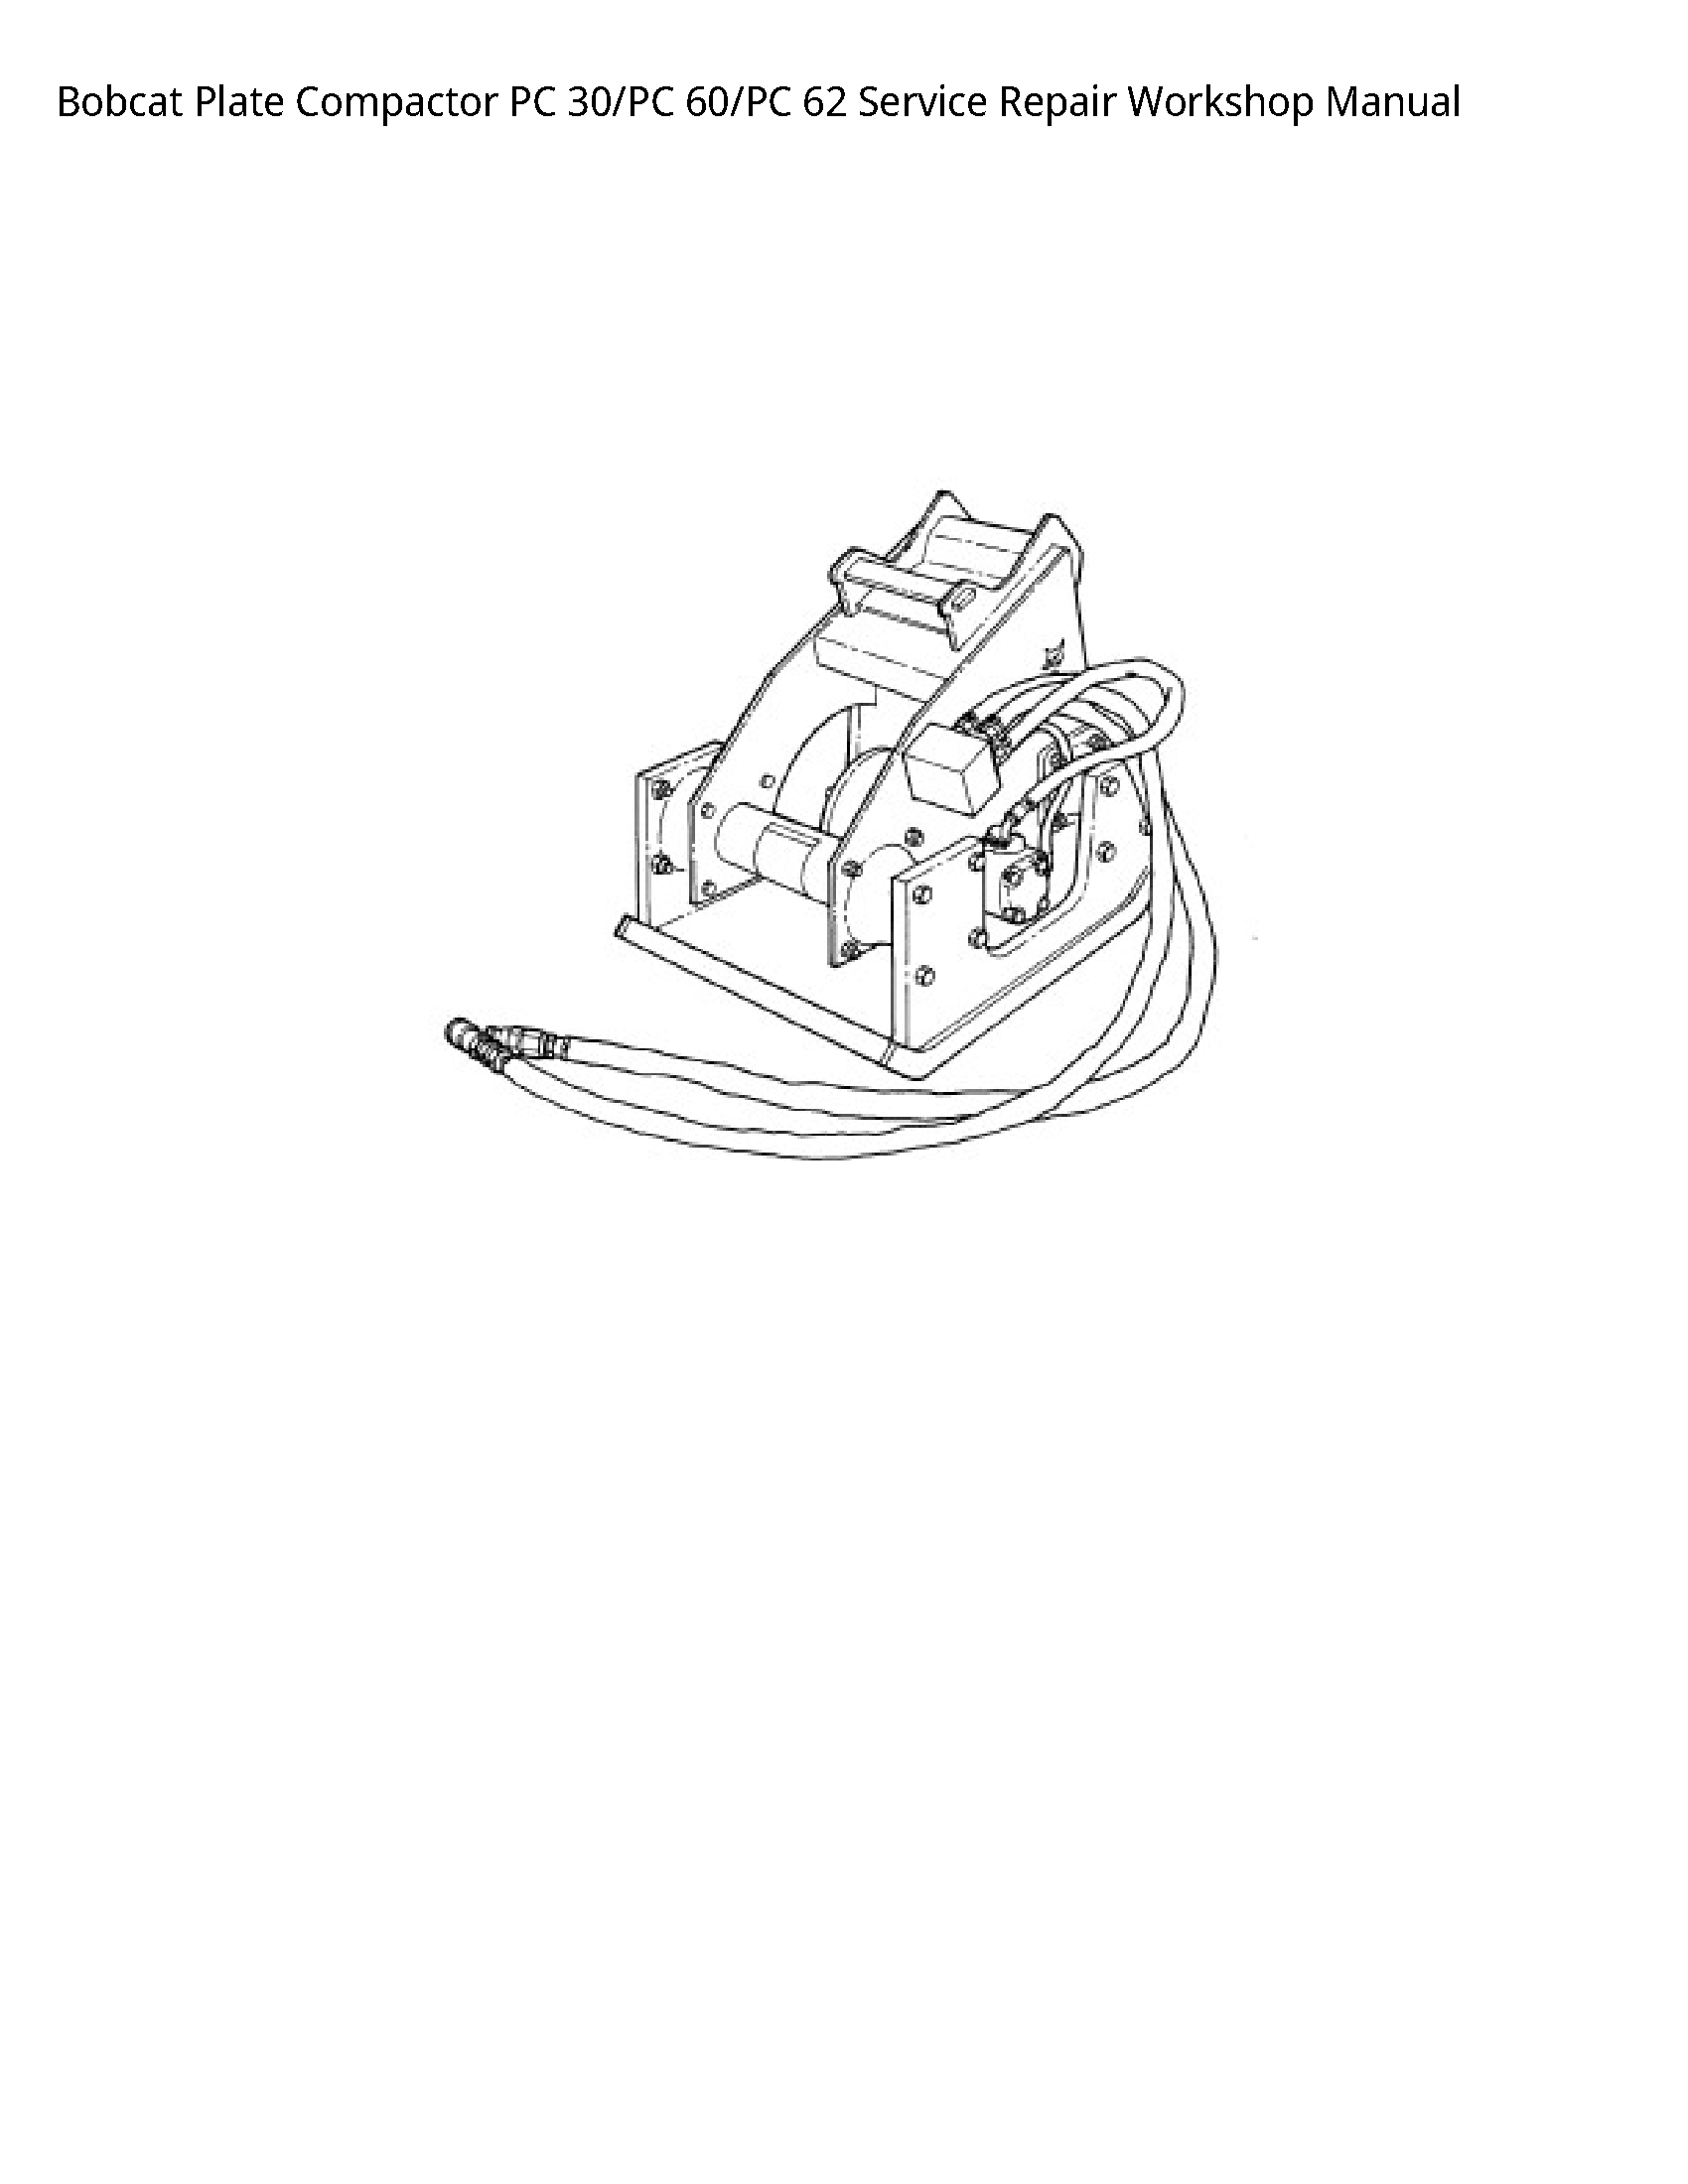 Bobcat Plate Compactor PC 30/PC 60/PC 62 Service Repair Workshop Manual